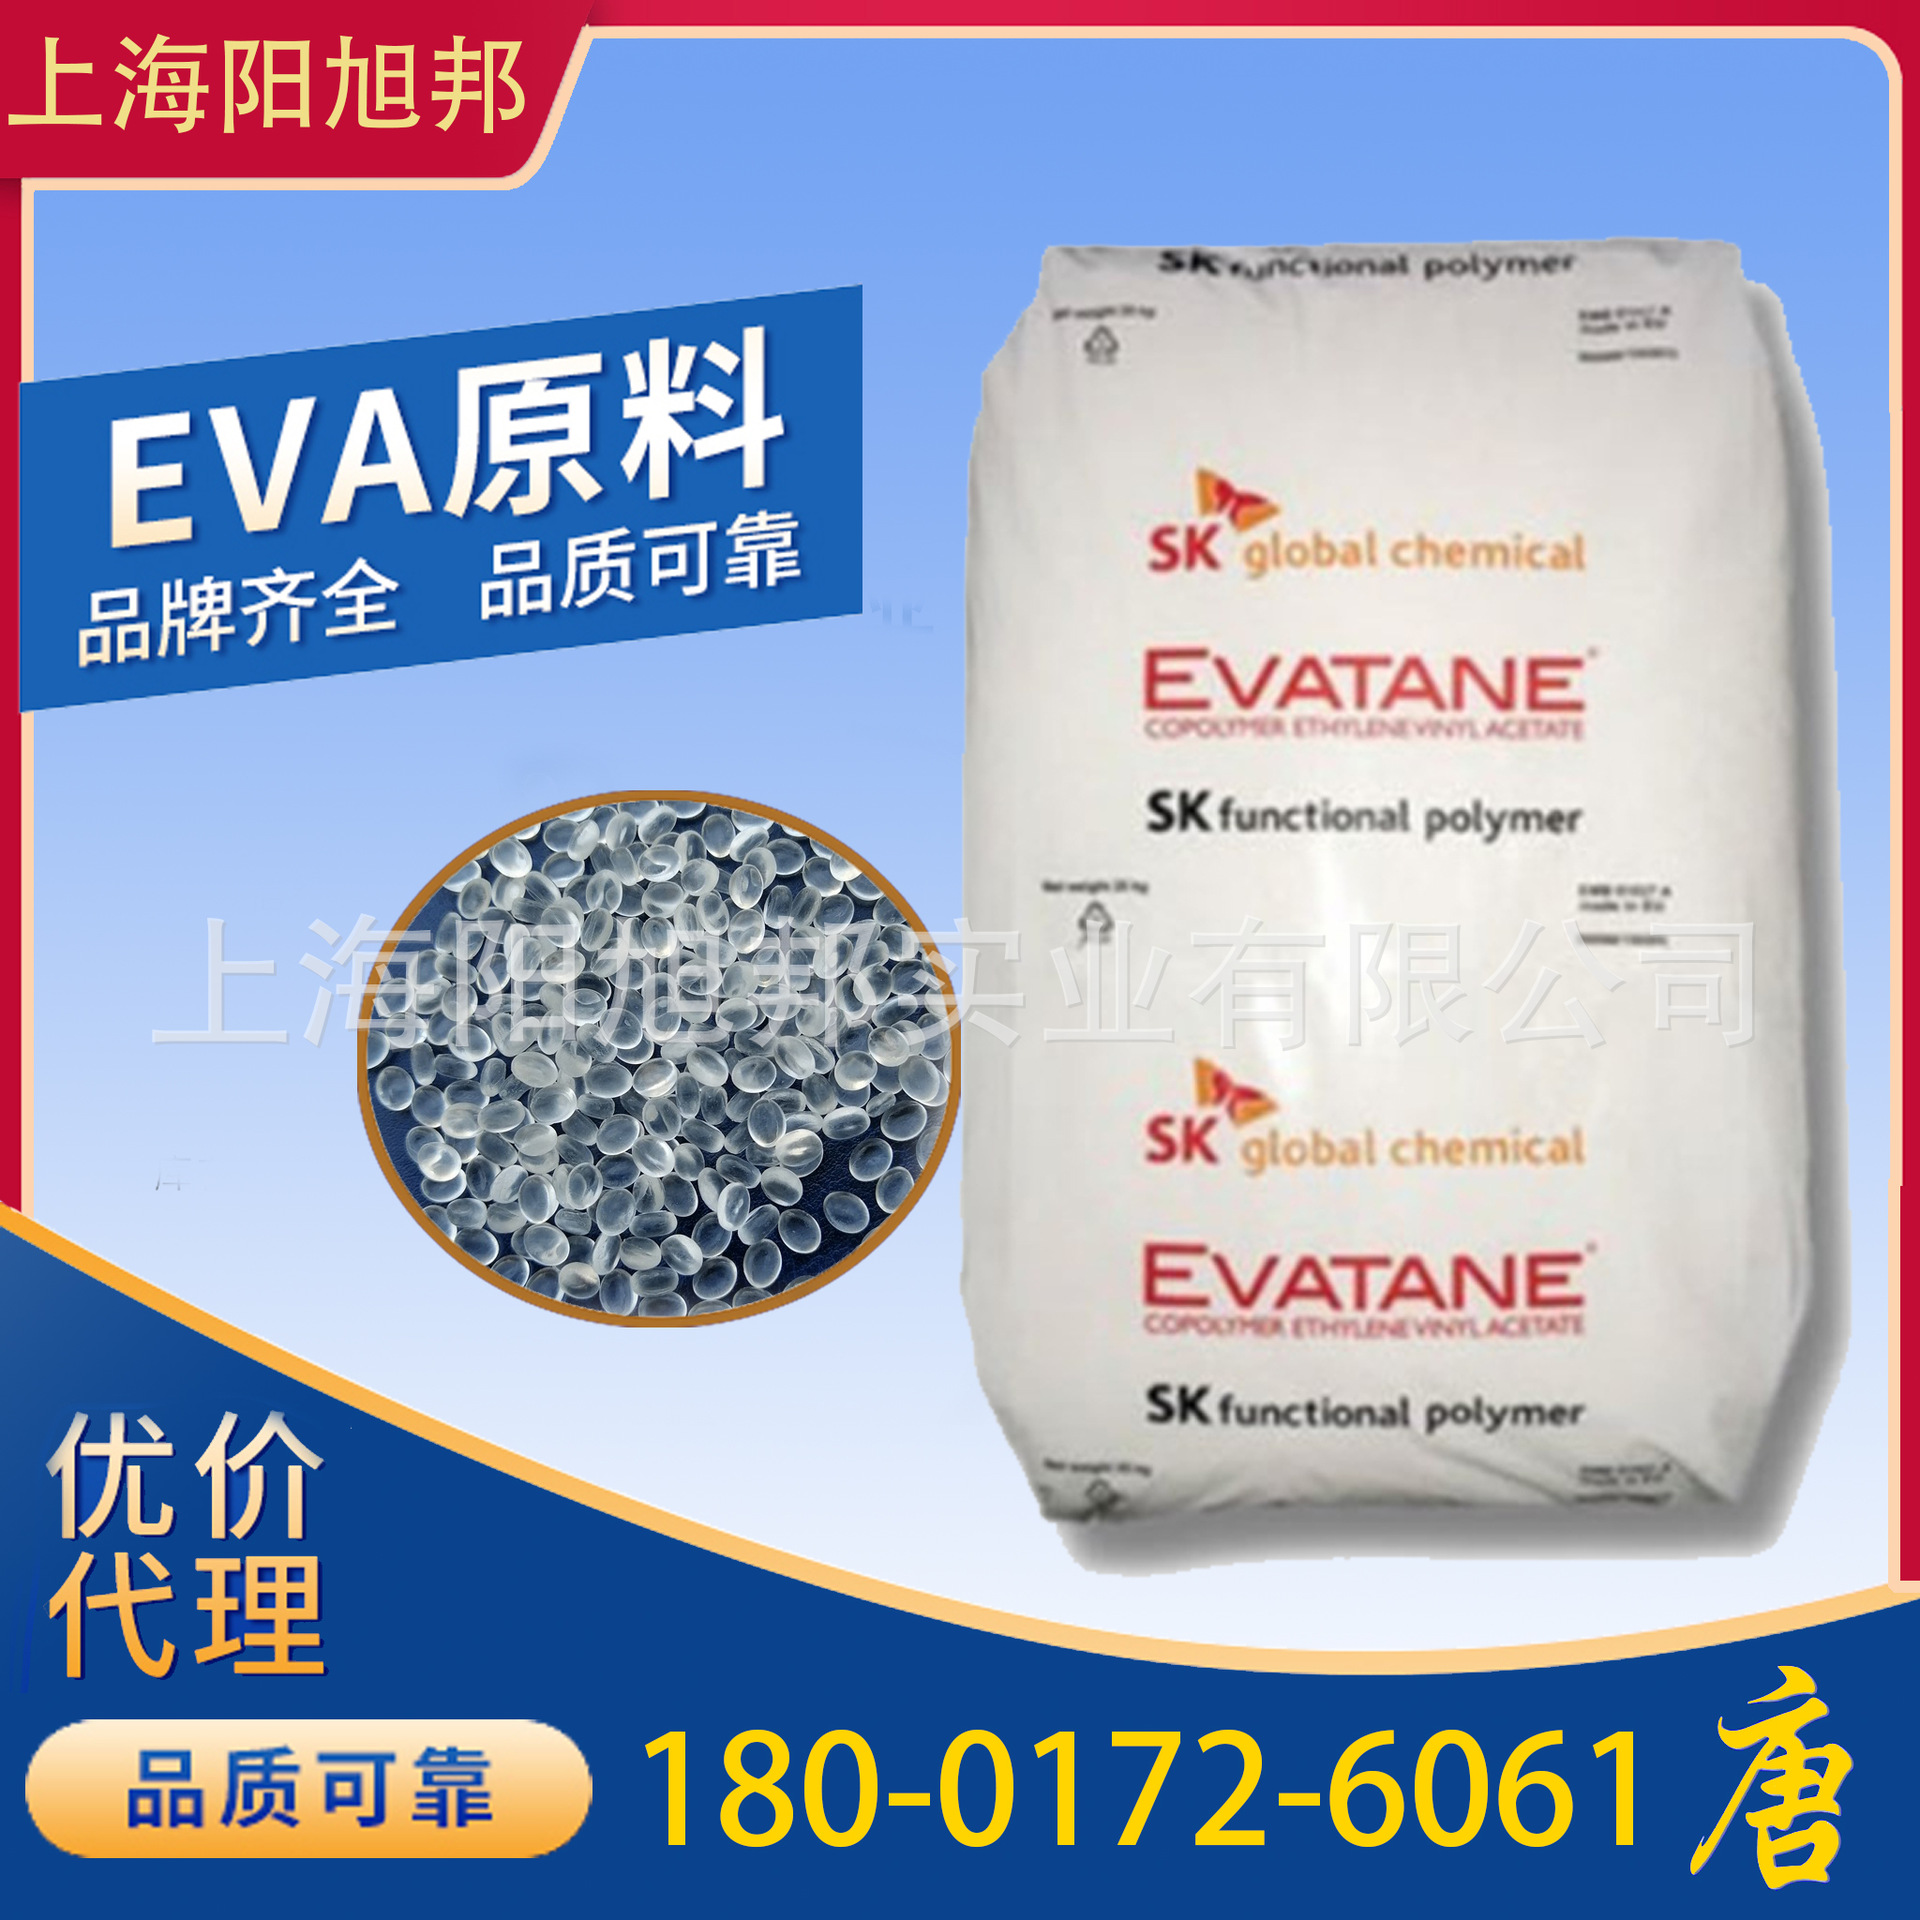 EVA 韩国SK 40-55 热熔胶 高流动 粘合剂 印油墨级 防结冻 涂覆级